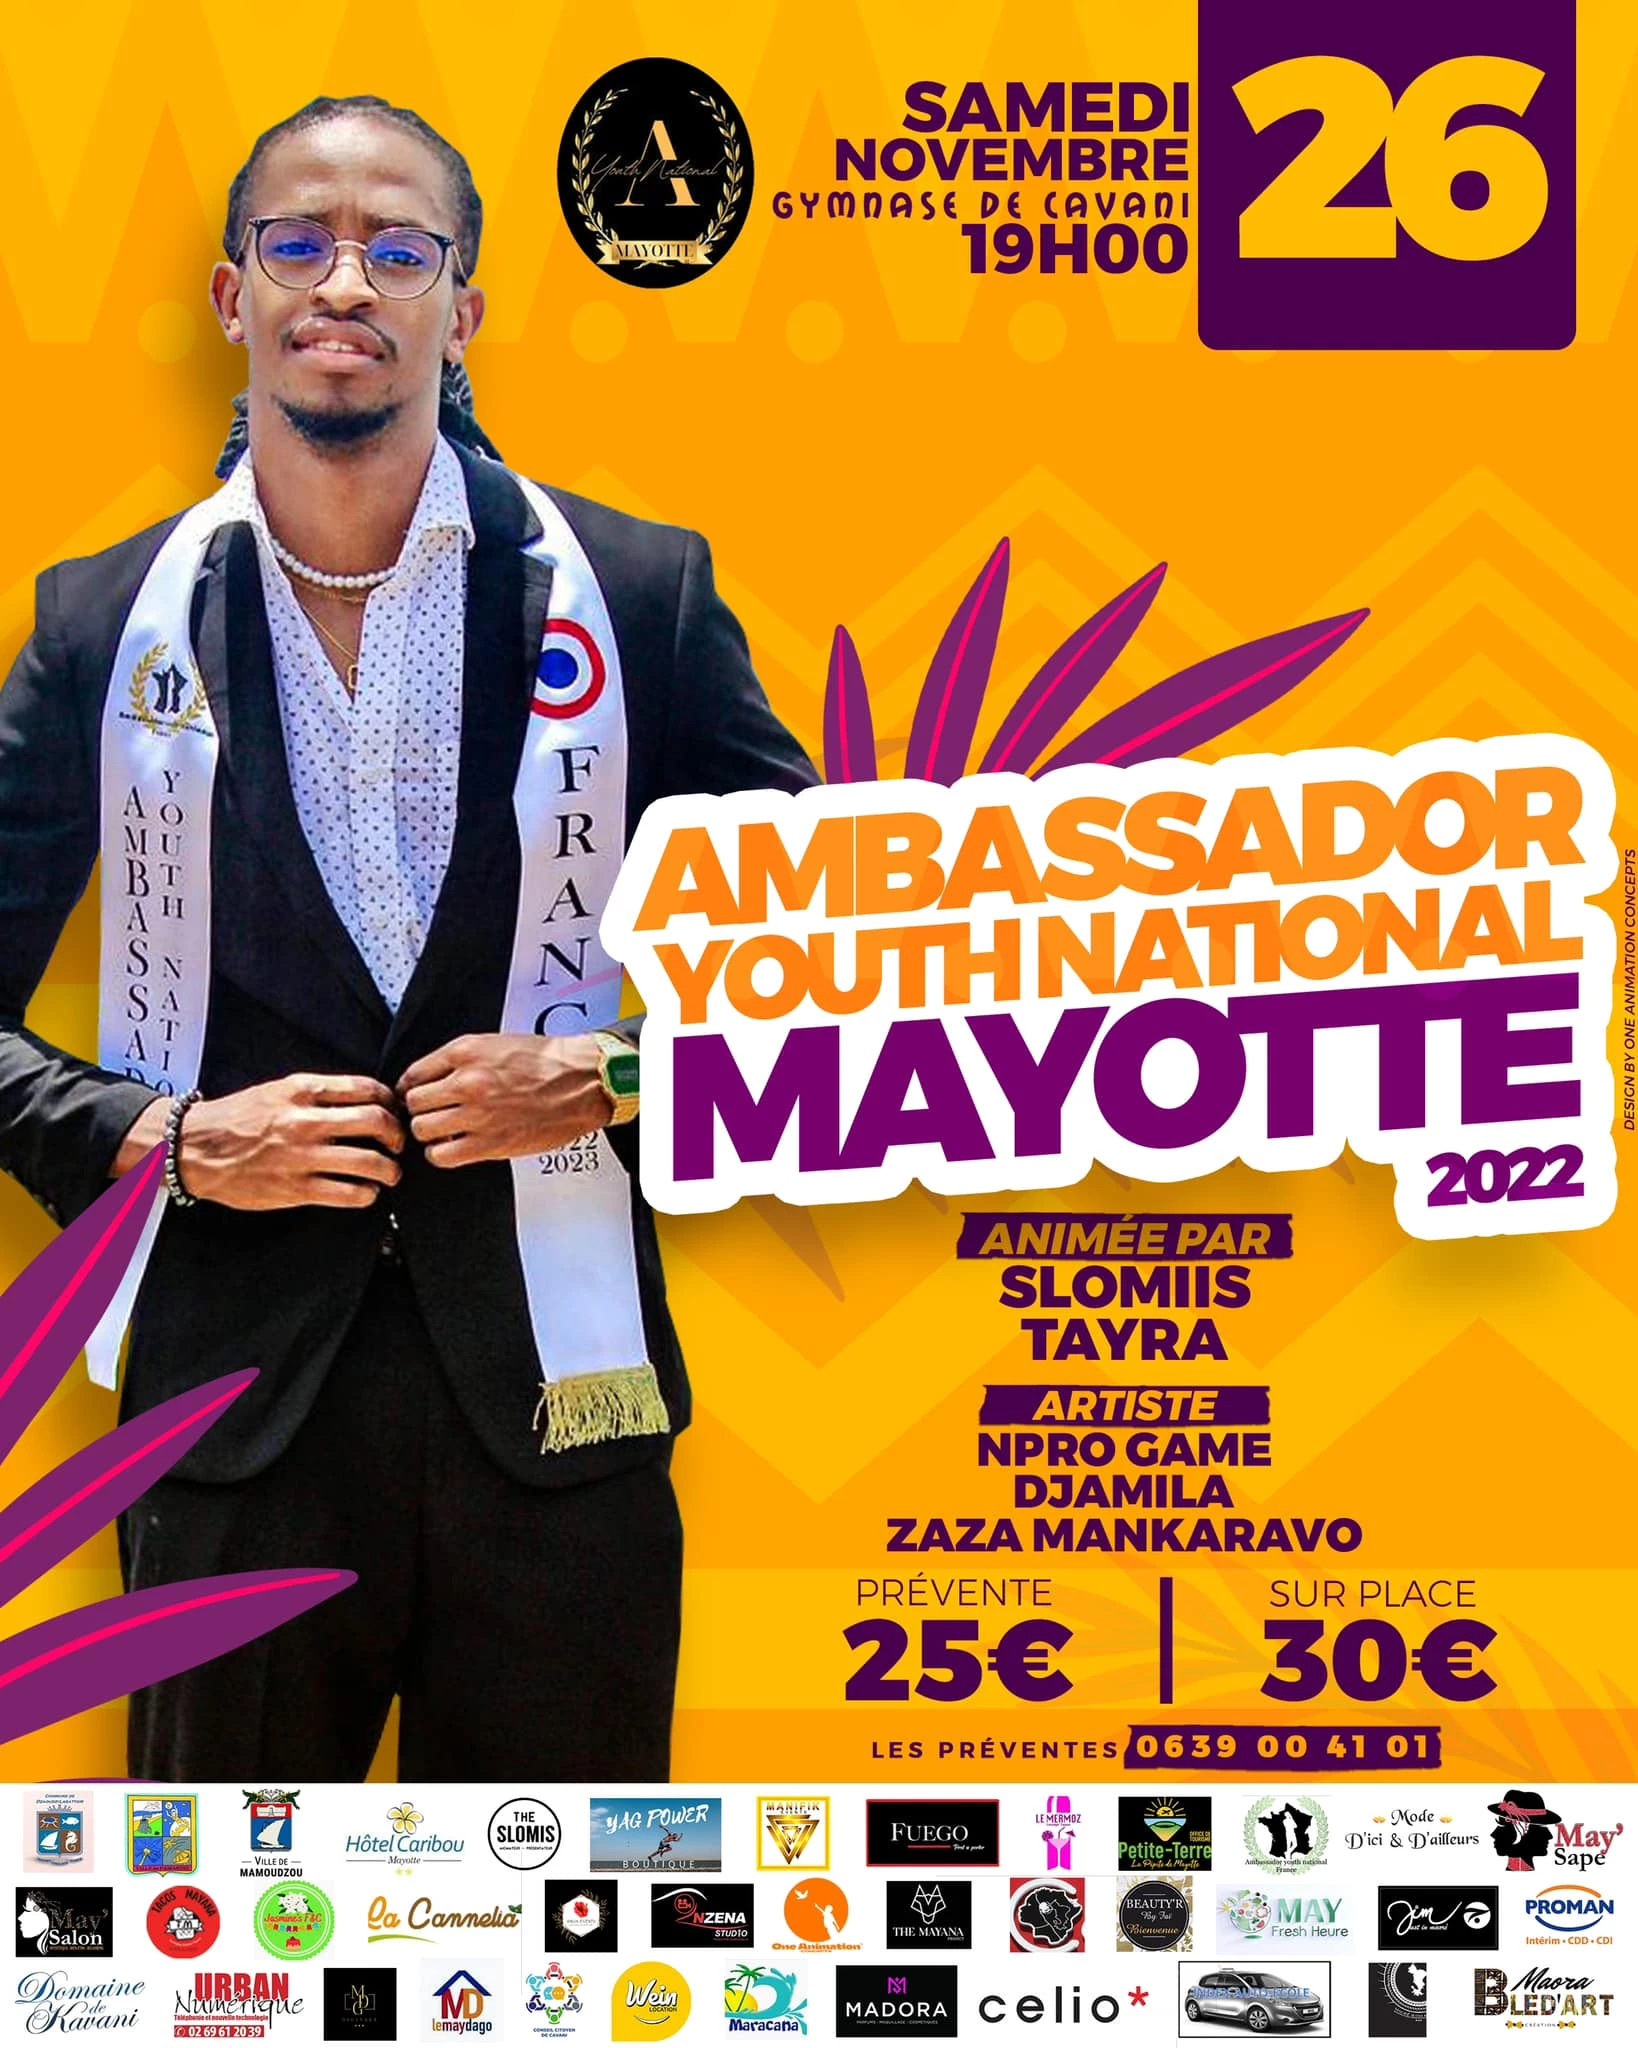 Élection  Ambassador youth national Mayotte 2022